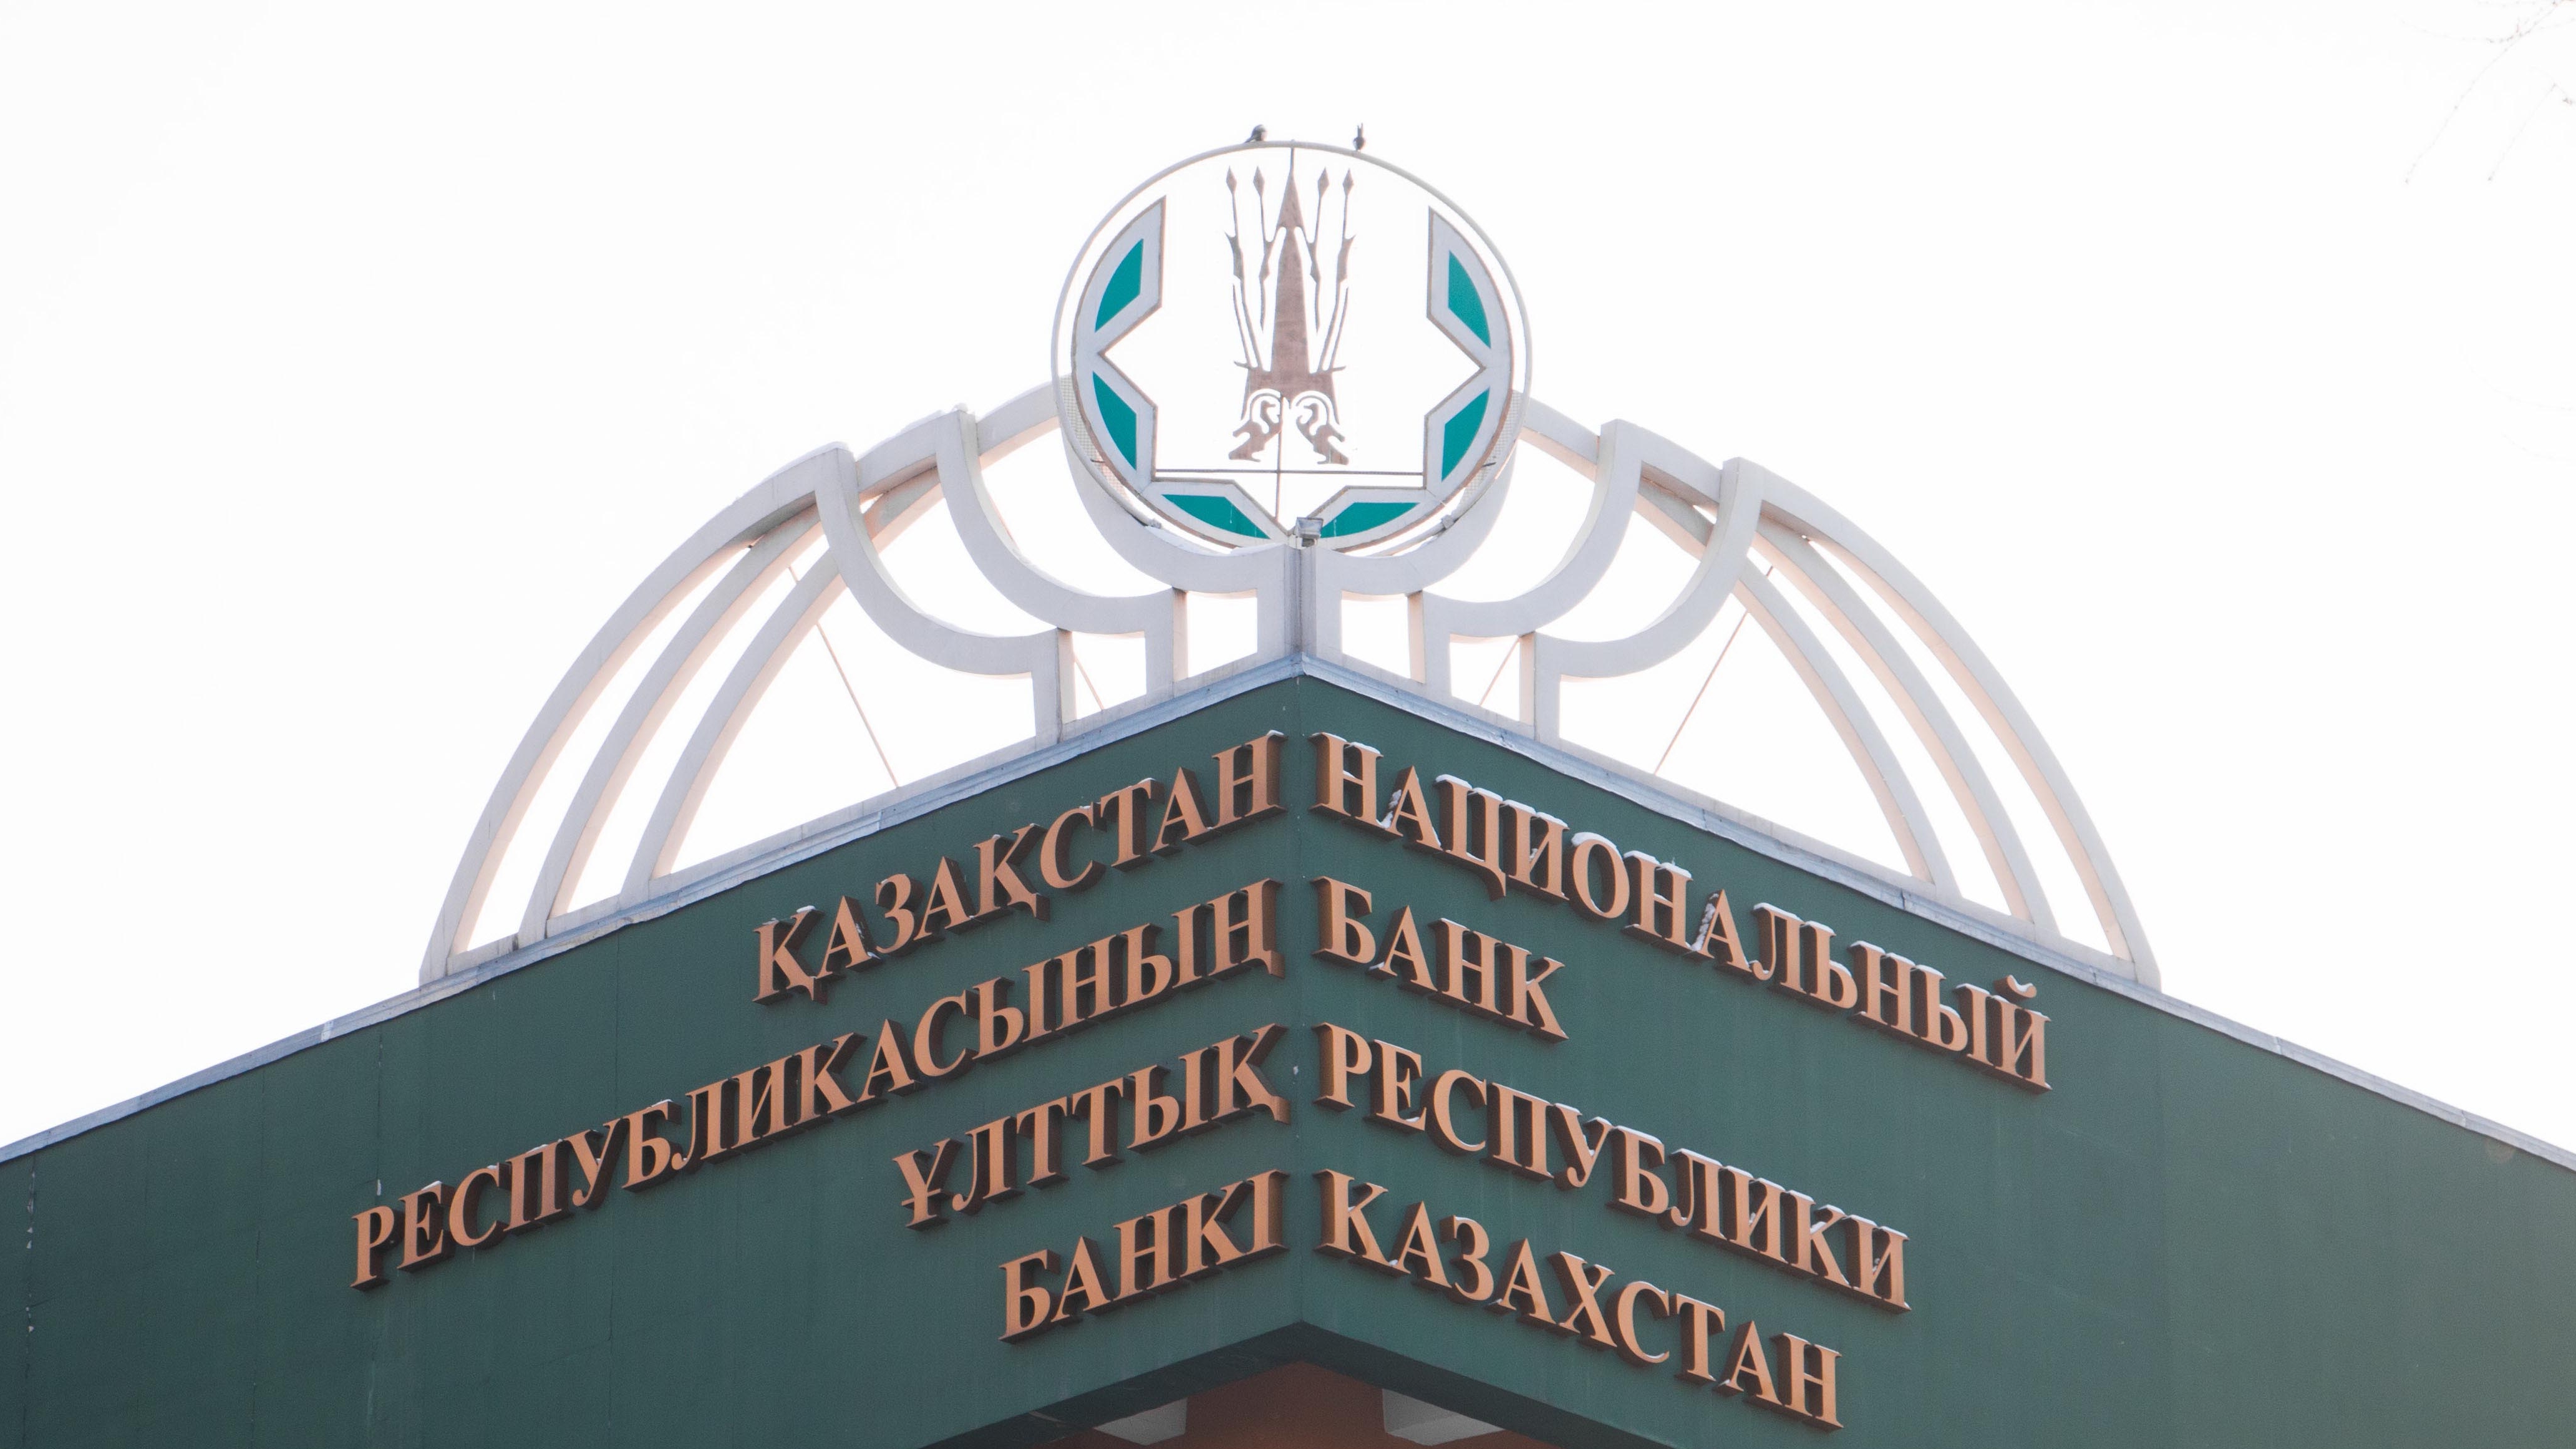 Сайт нац банк казахстан. Нацбанк Казахстана логотип. Центральный банк Казахстана. Национальный банк. Нац банк лого.